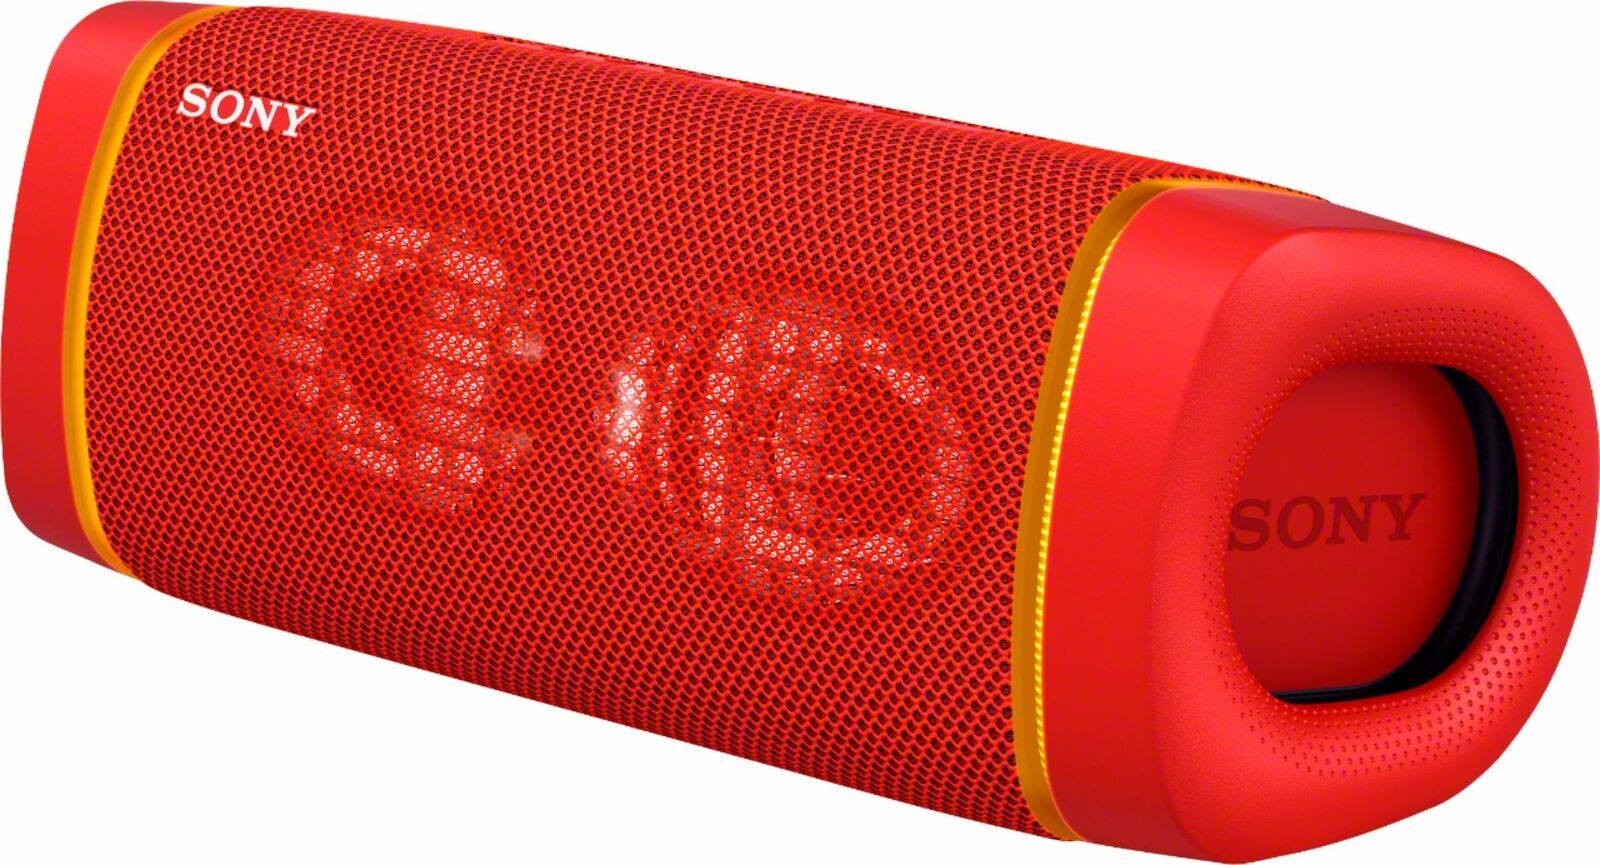 Sony Srs-Xb33 Portable Rechargeable Waterproof Bluetooth Speaker - Red